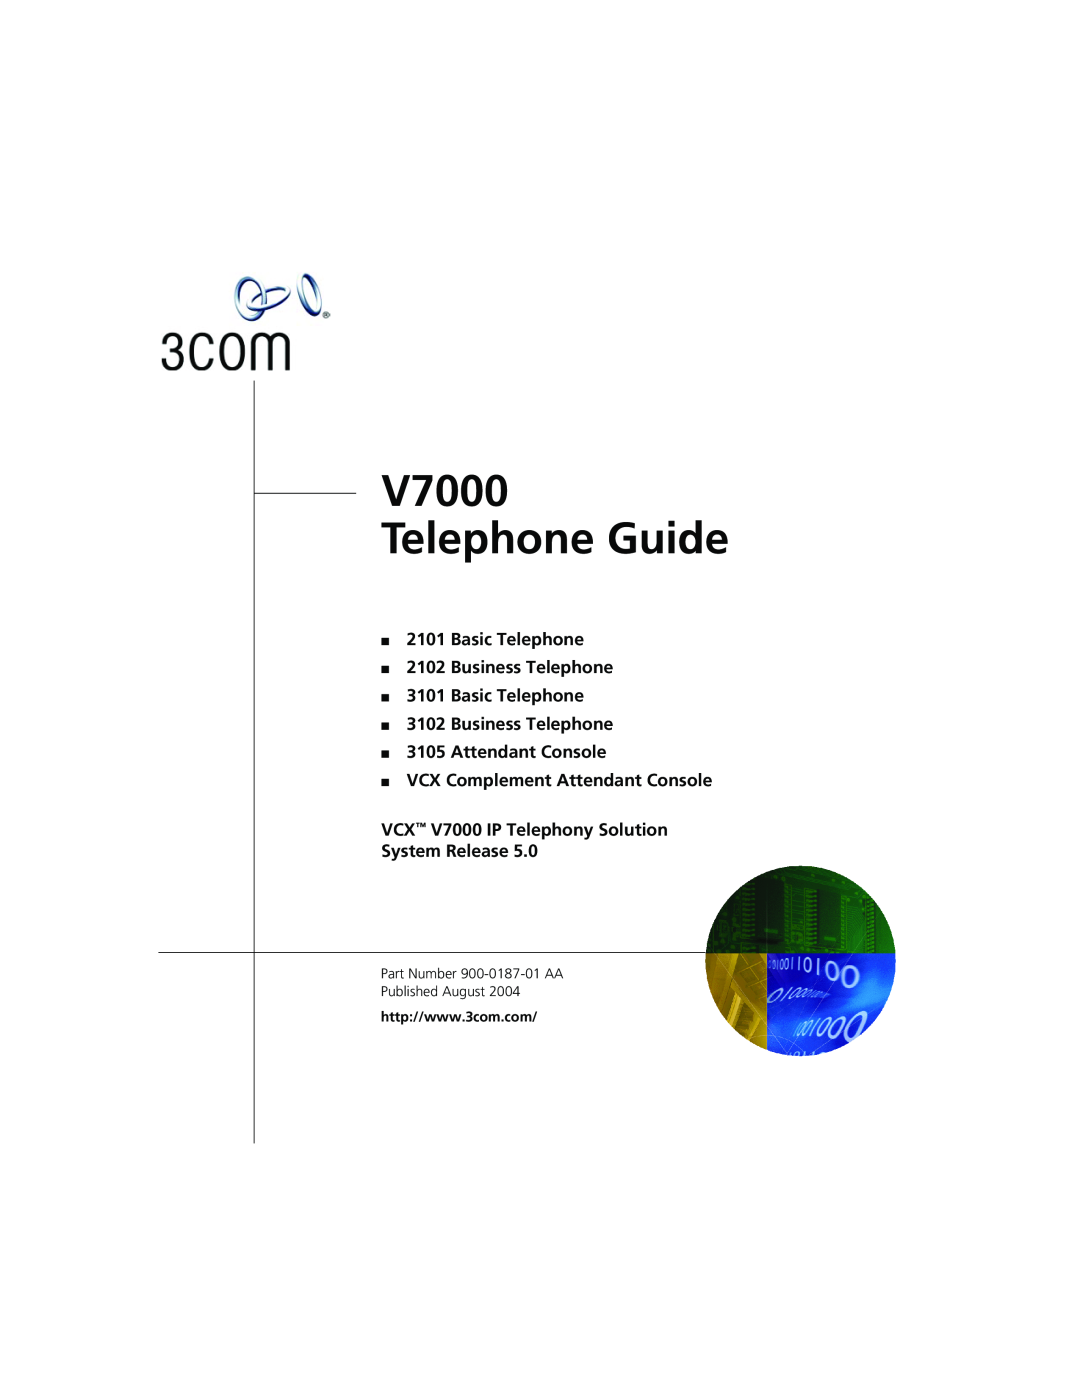 3Com manual V7000 Telephone Guide, Basic Telephone 2102 Business Telephone 3101 Basic Telephone 